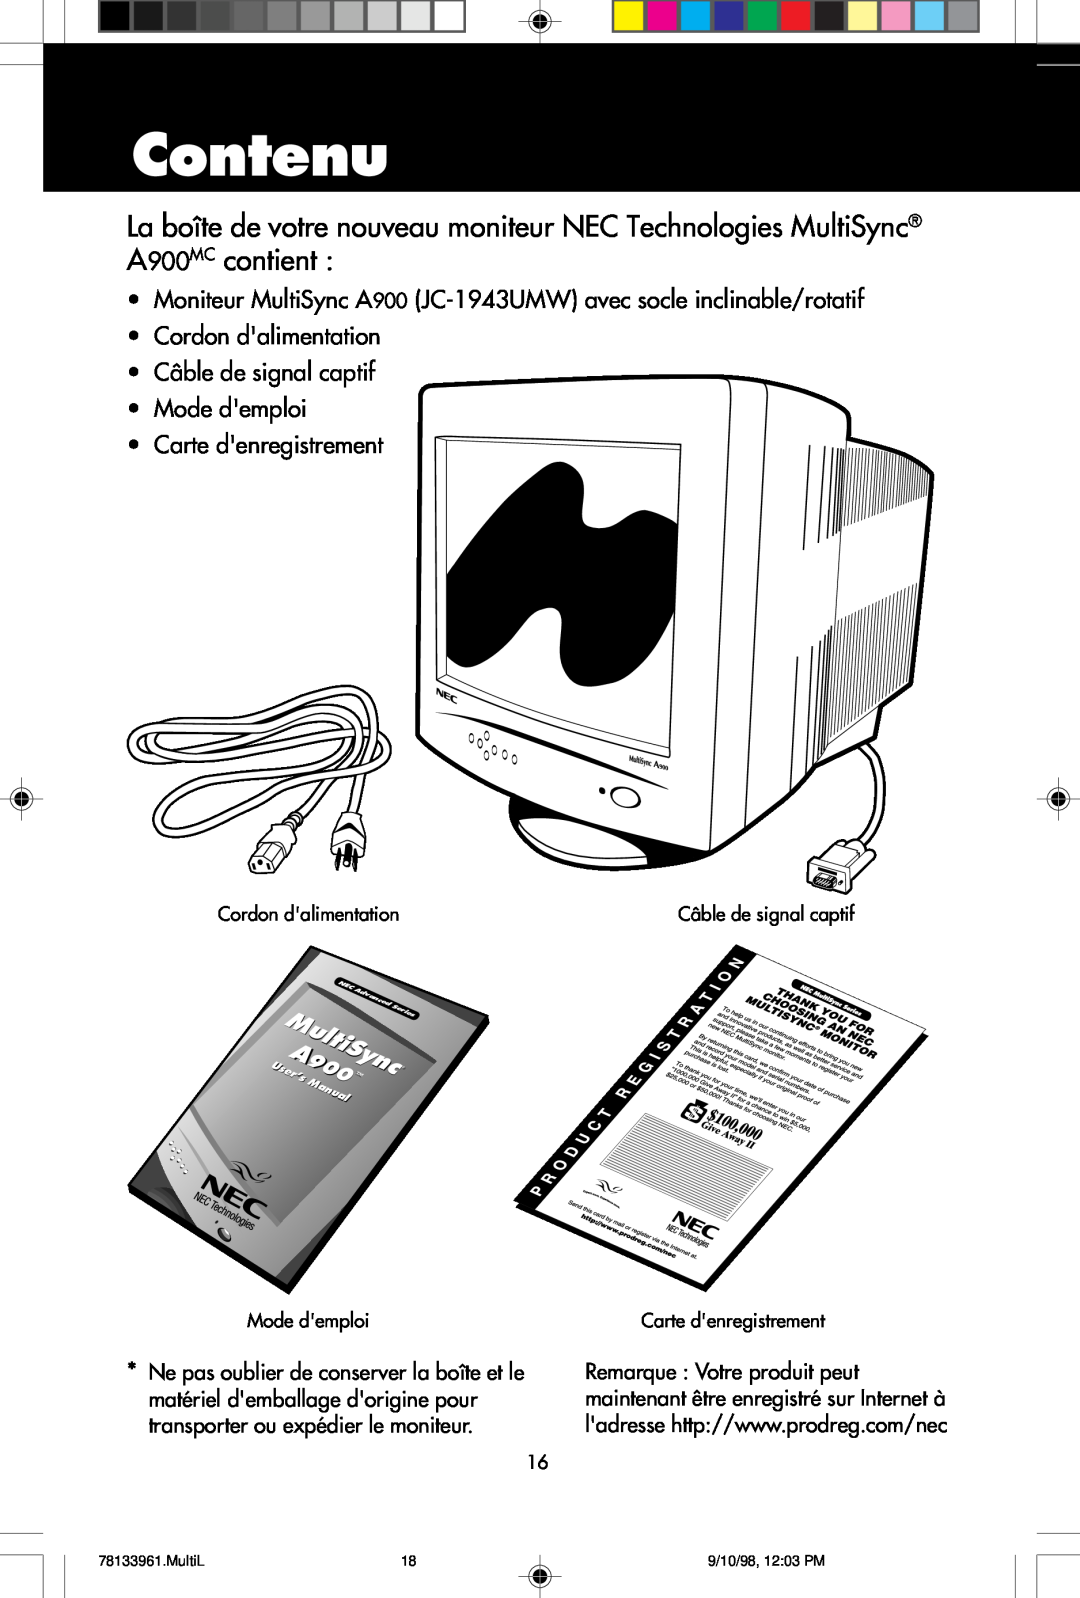 NEC A900 Contenu, MultiSync, Cordon dalimentation, Câble de signal captif, MultiL, 9/10/98, 12:03 PM, User’s900, Manual 